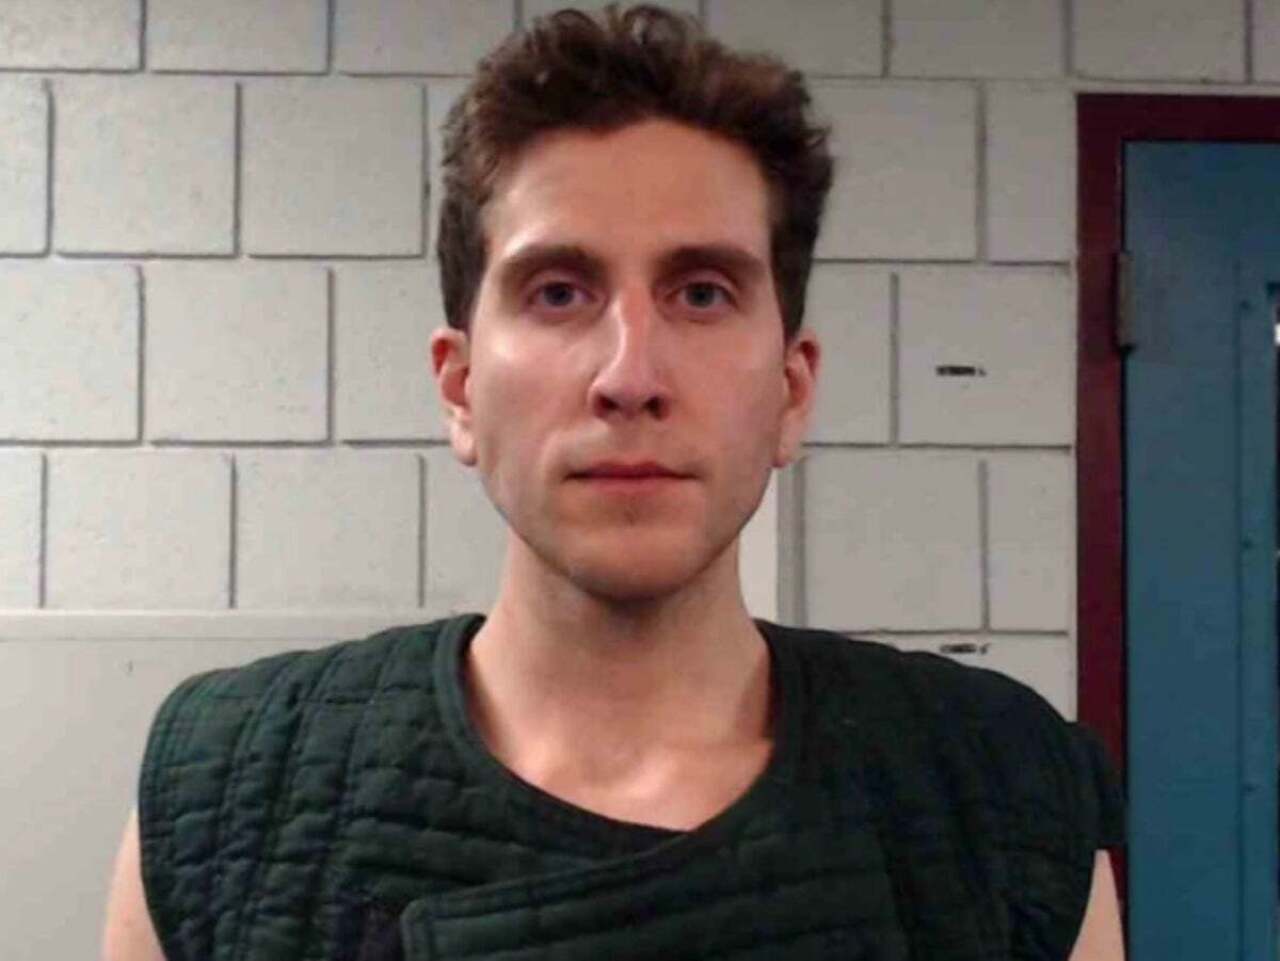 [IMAGE] Idaho murder suspect Bryan Kohberger was caught via genetic DNA ...